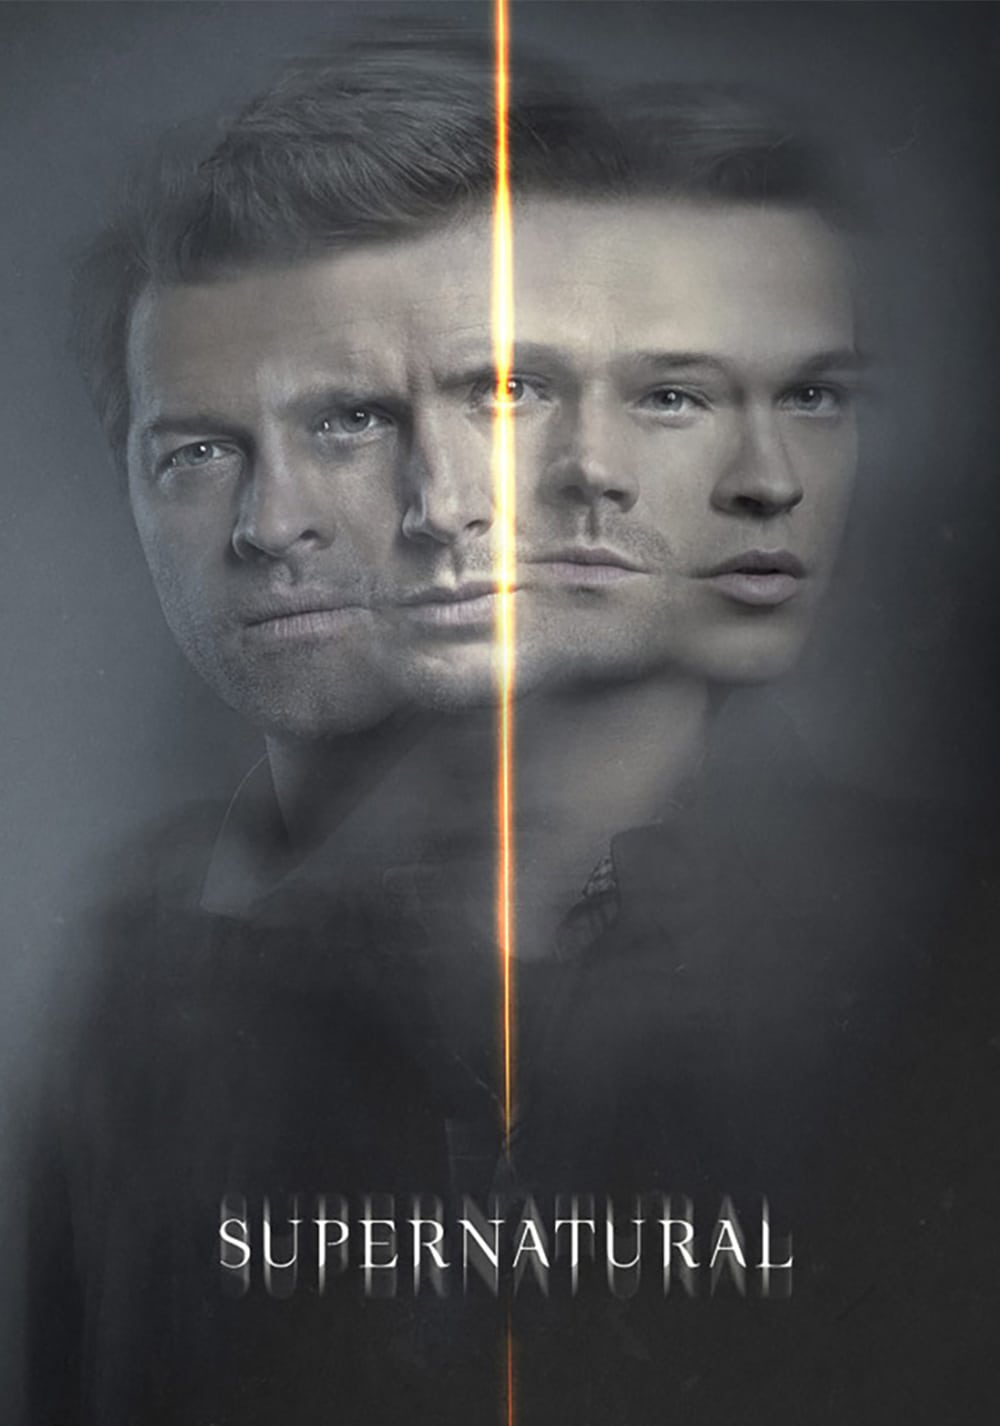 Supernatural V7 TV Show Poster Framed or Unframed Glossy Poster Free UK Shipping!!!